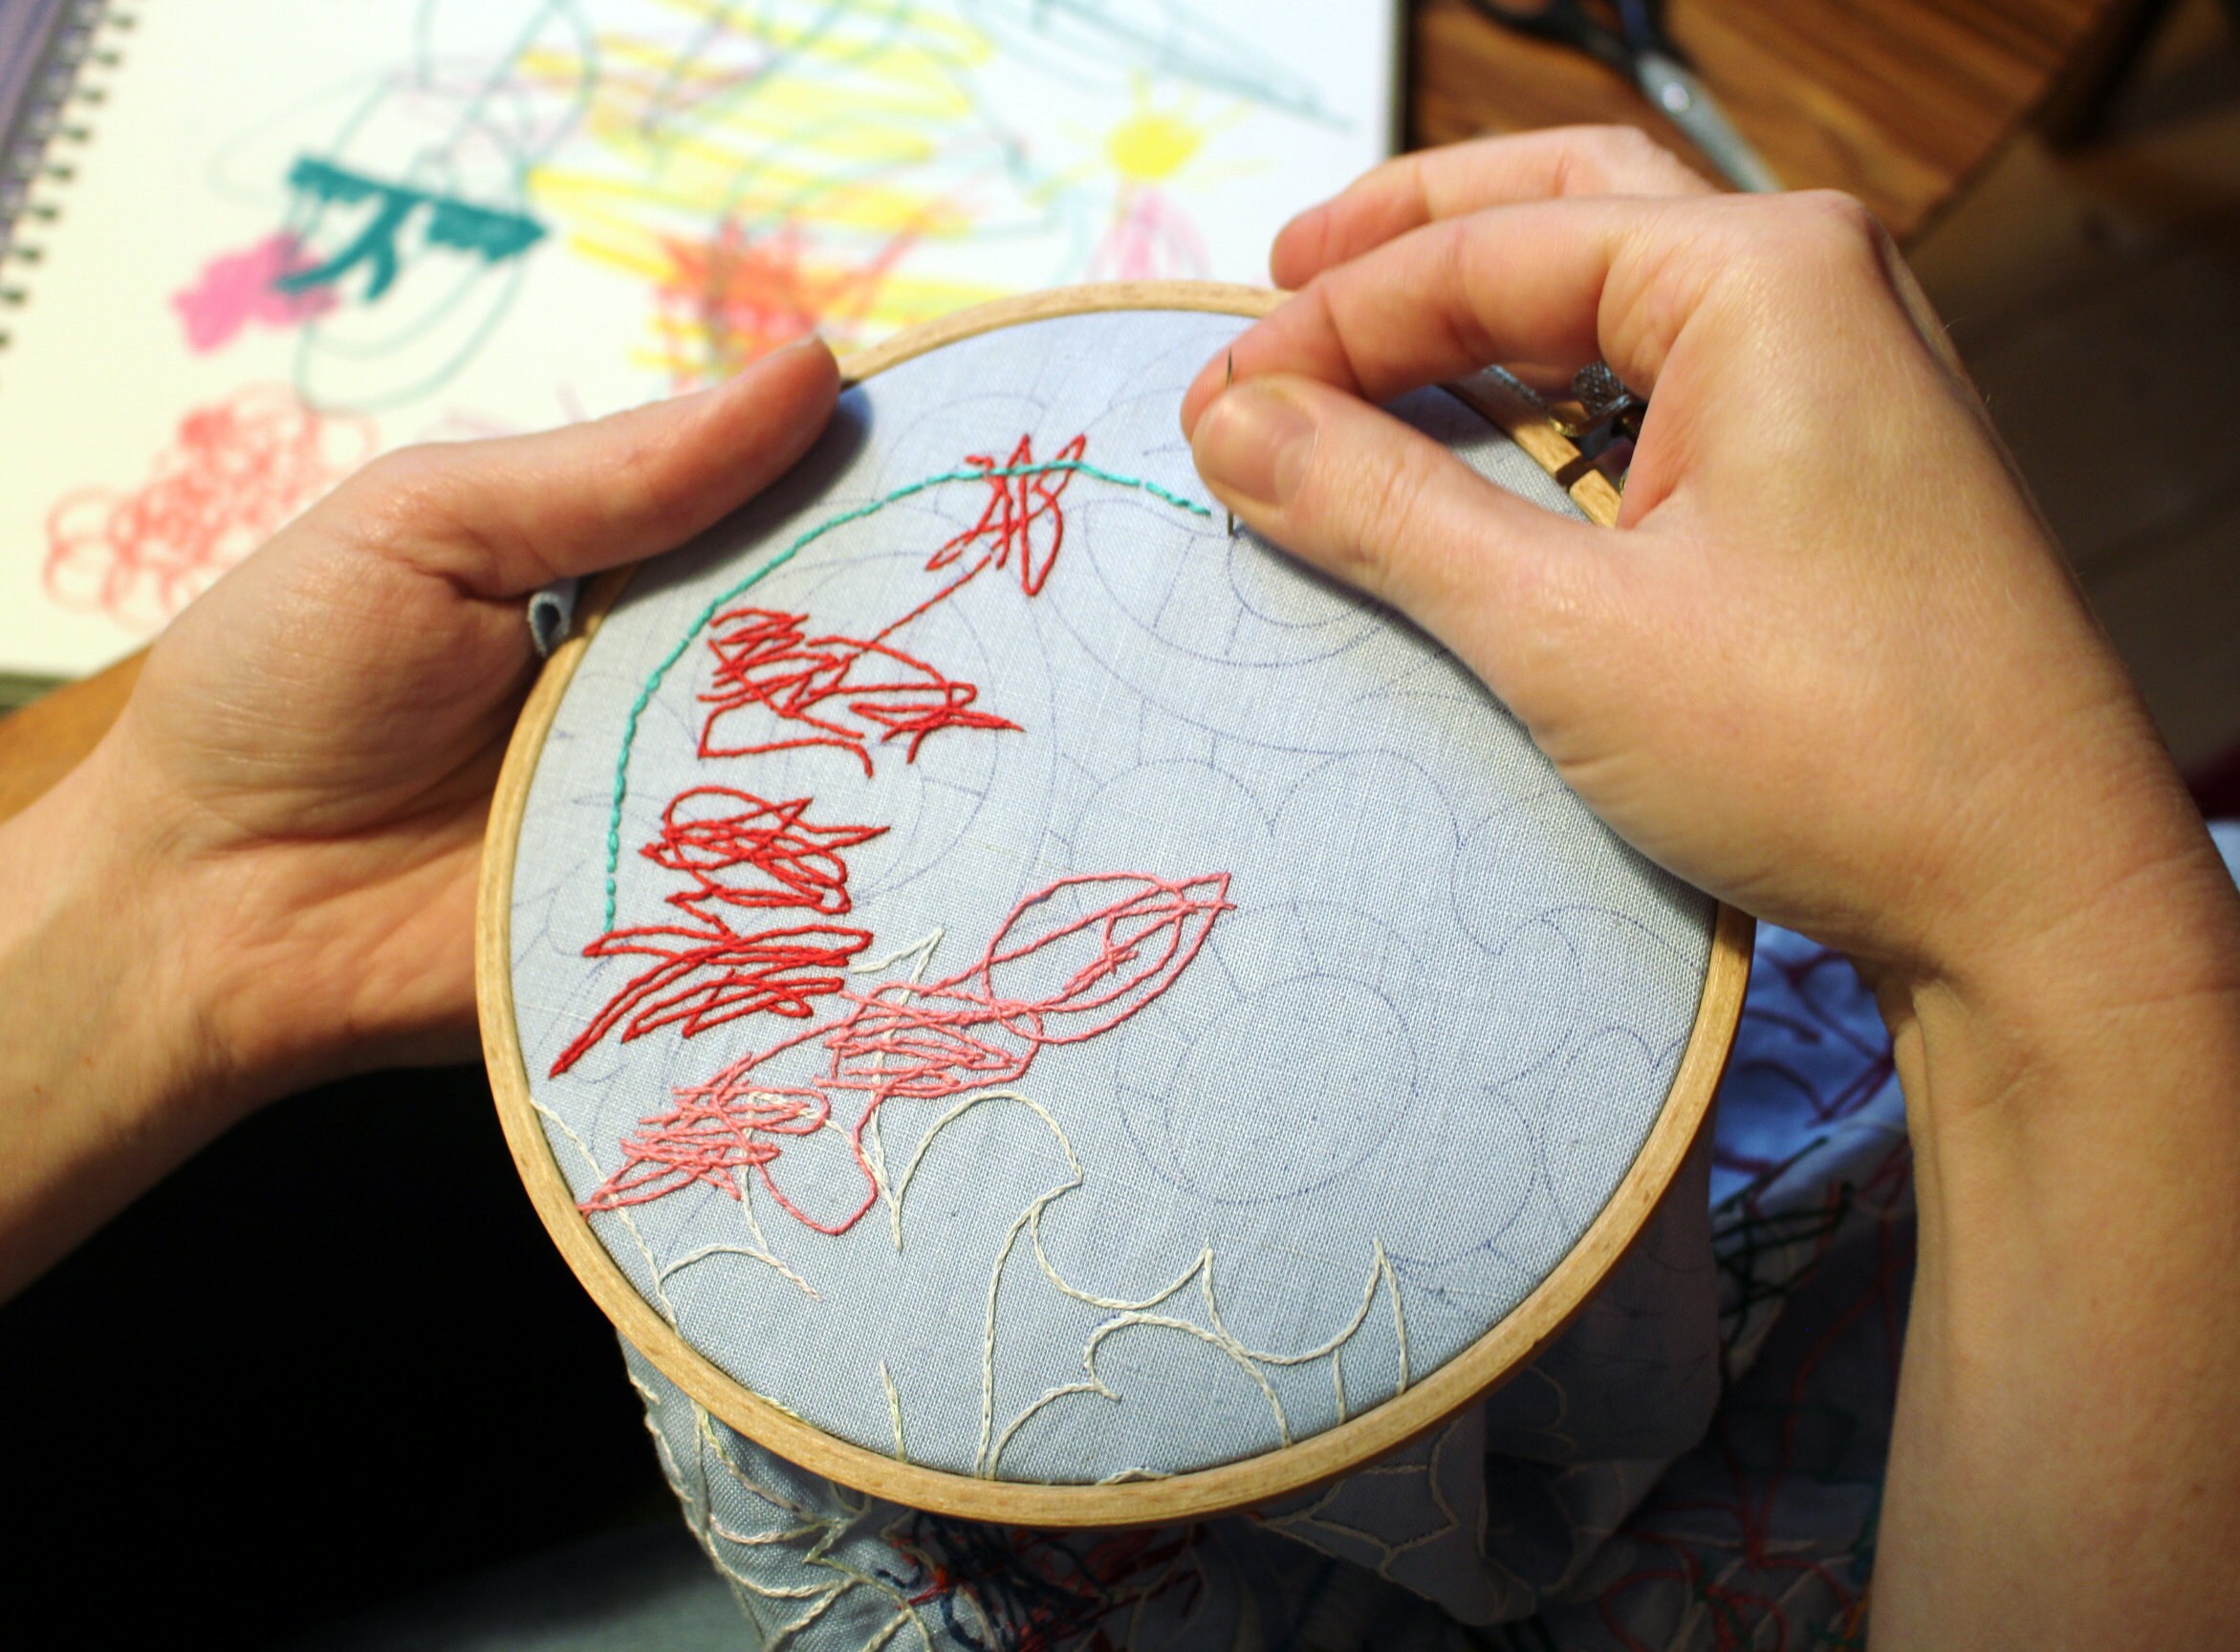 embroidery by Karolin Reichardt, 2018